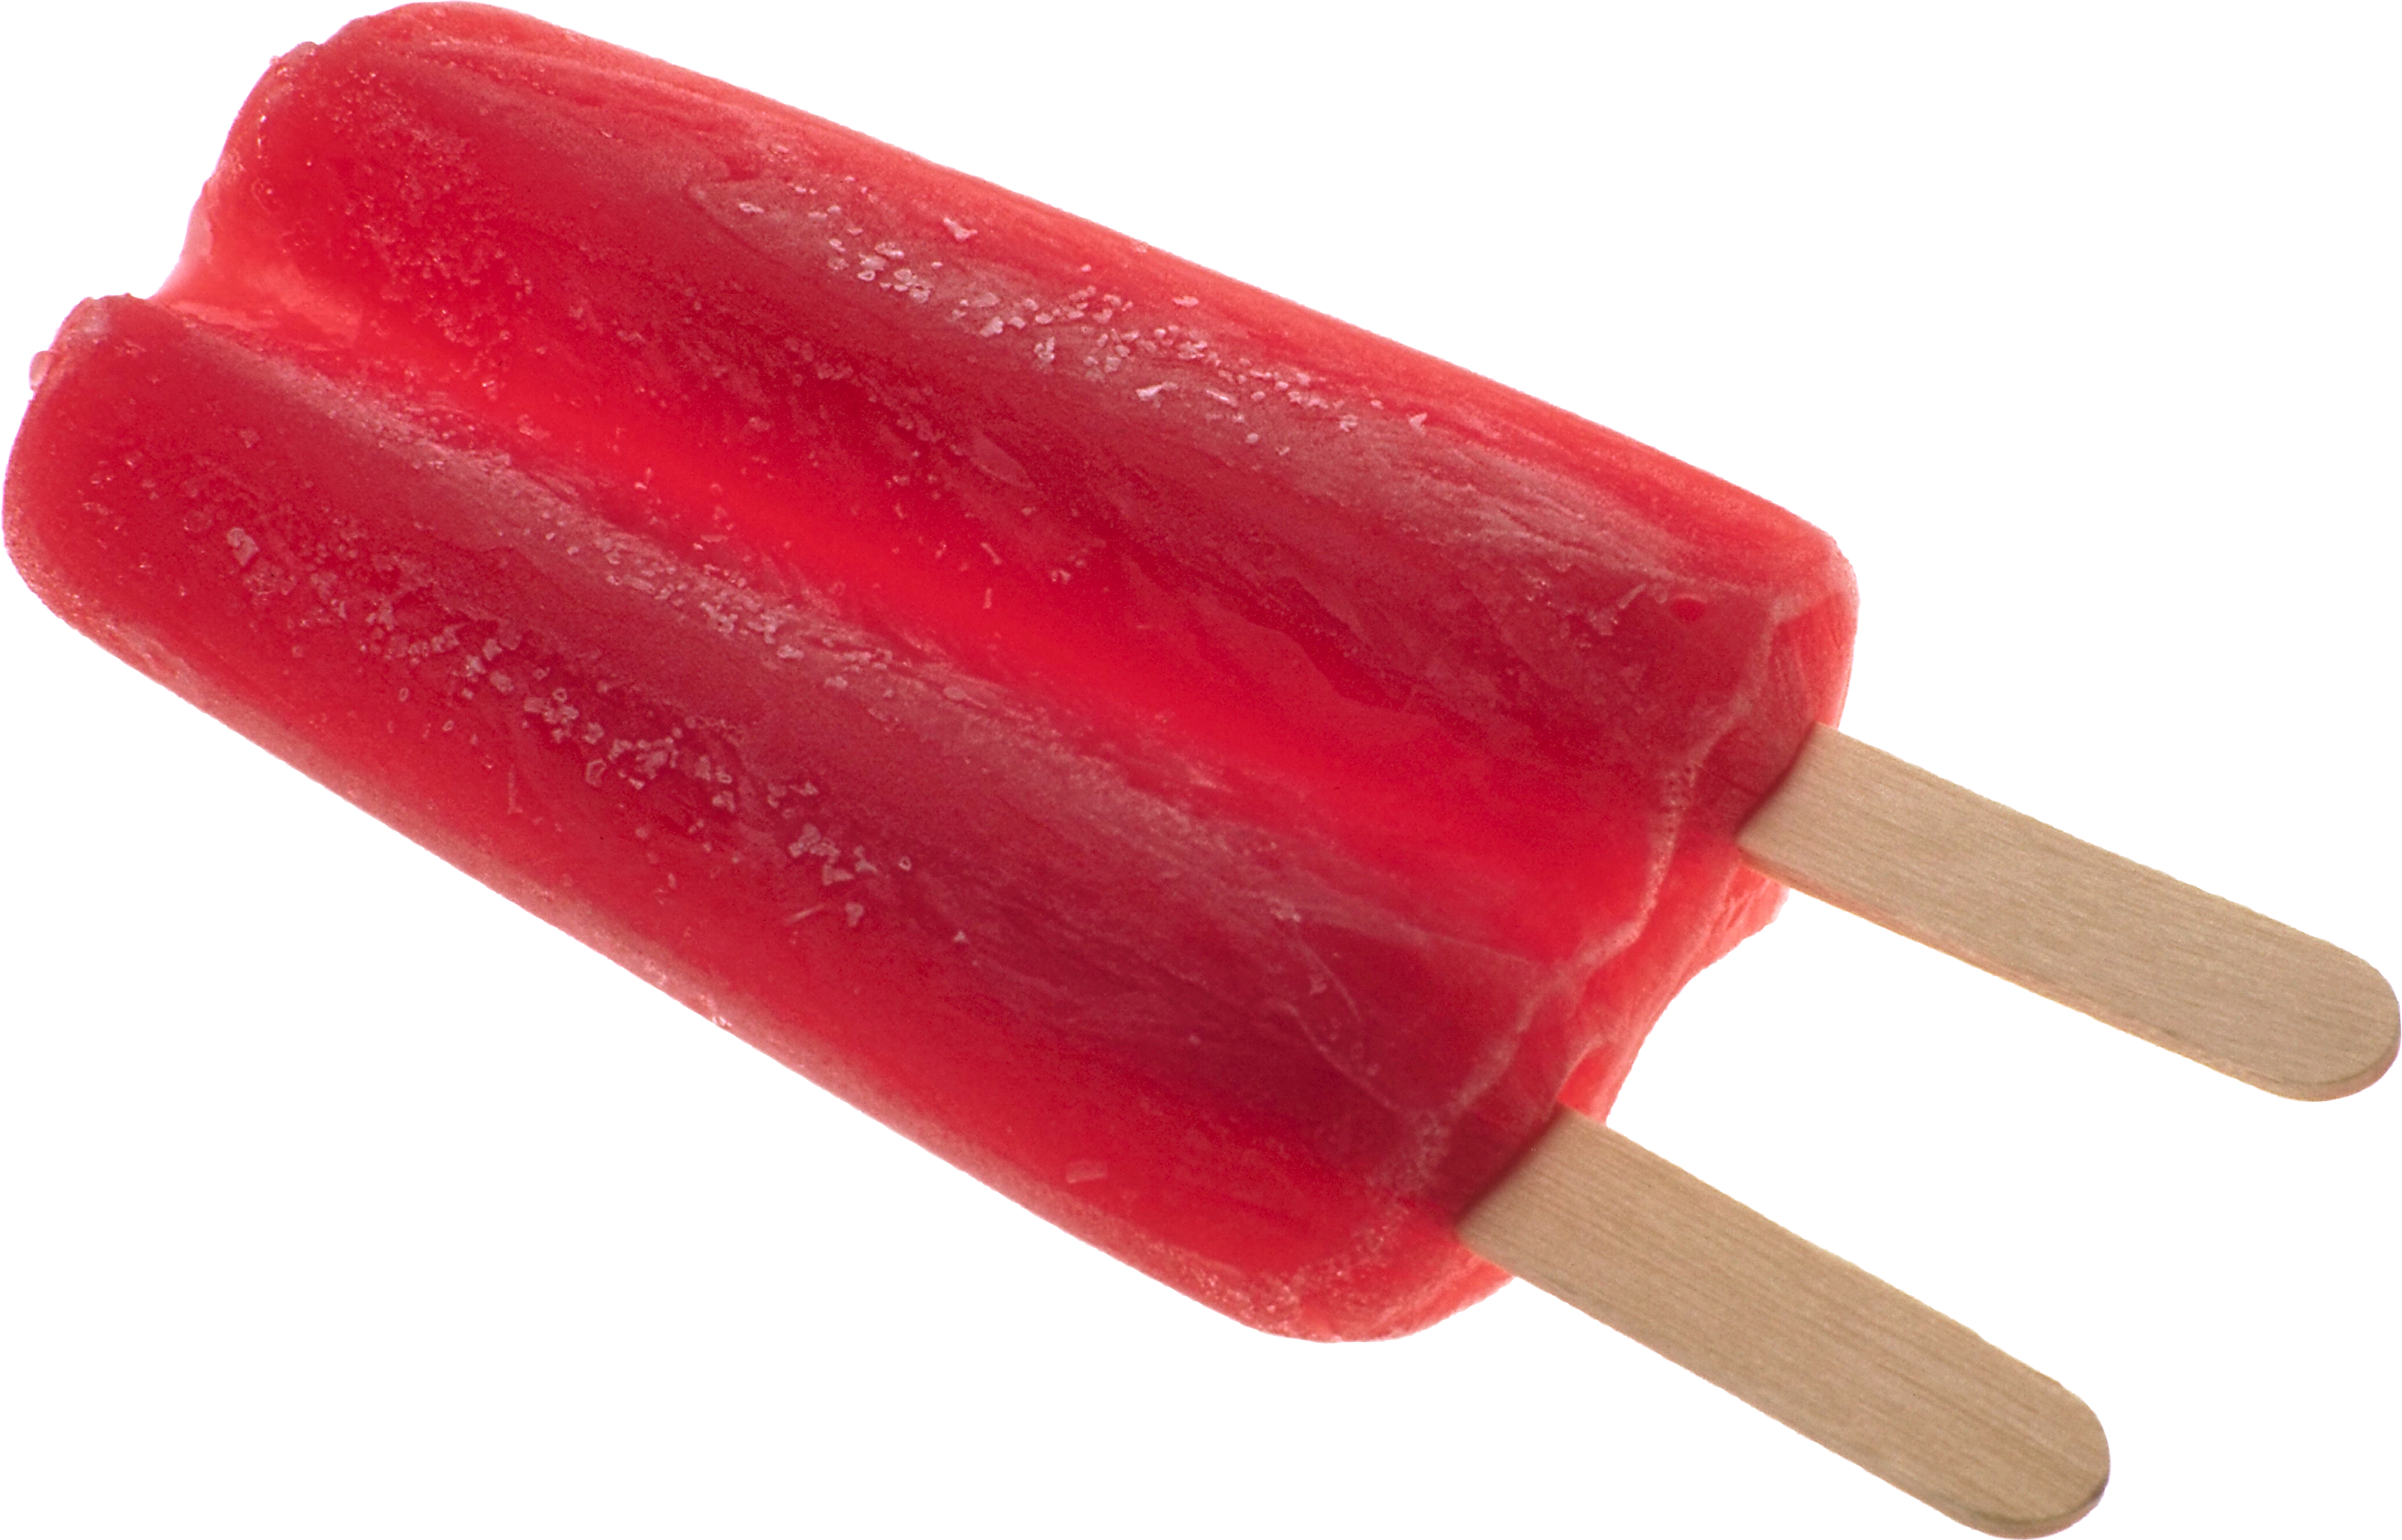 Image result for popsicles